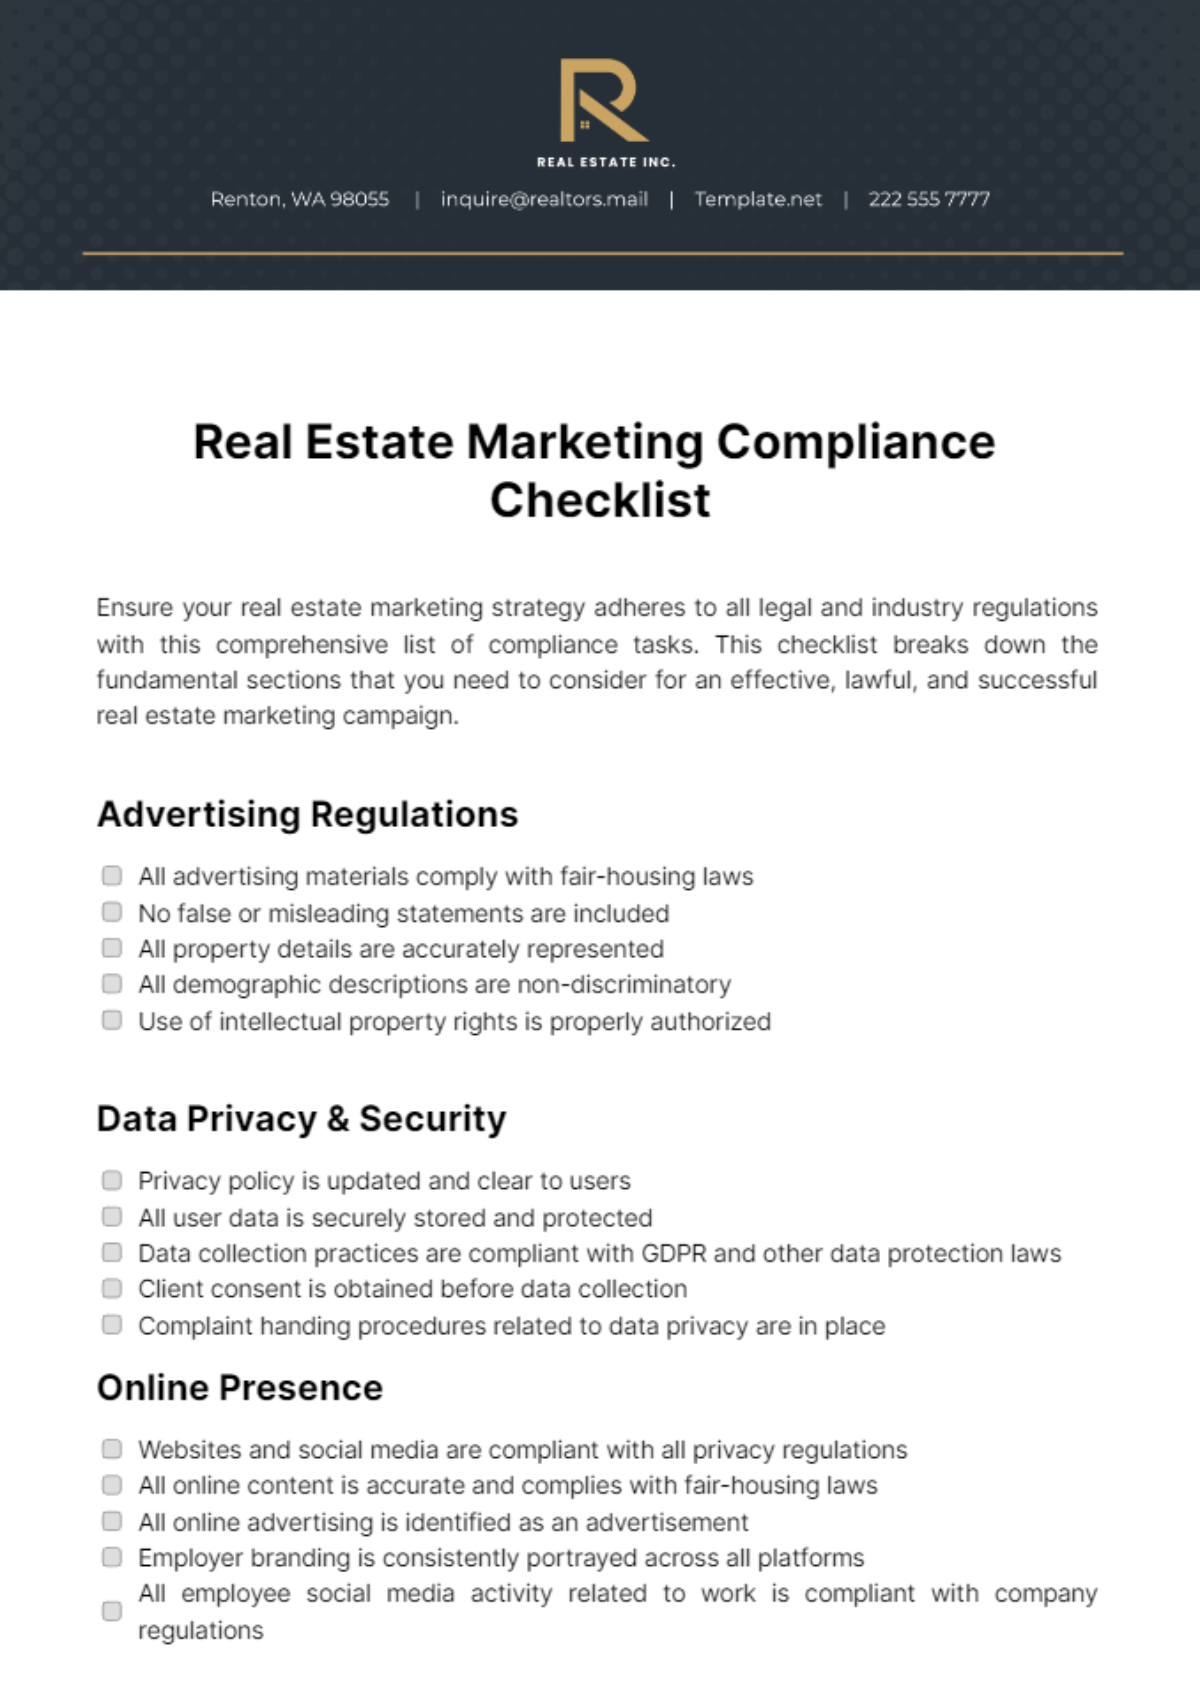 Real Estate Marketing Compliance Checklist Template